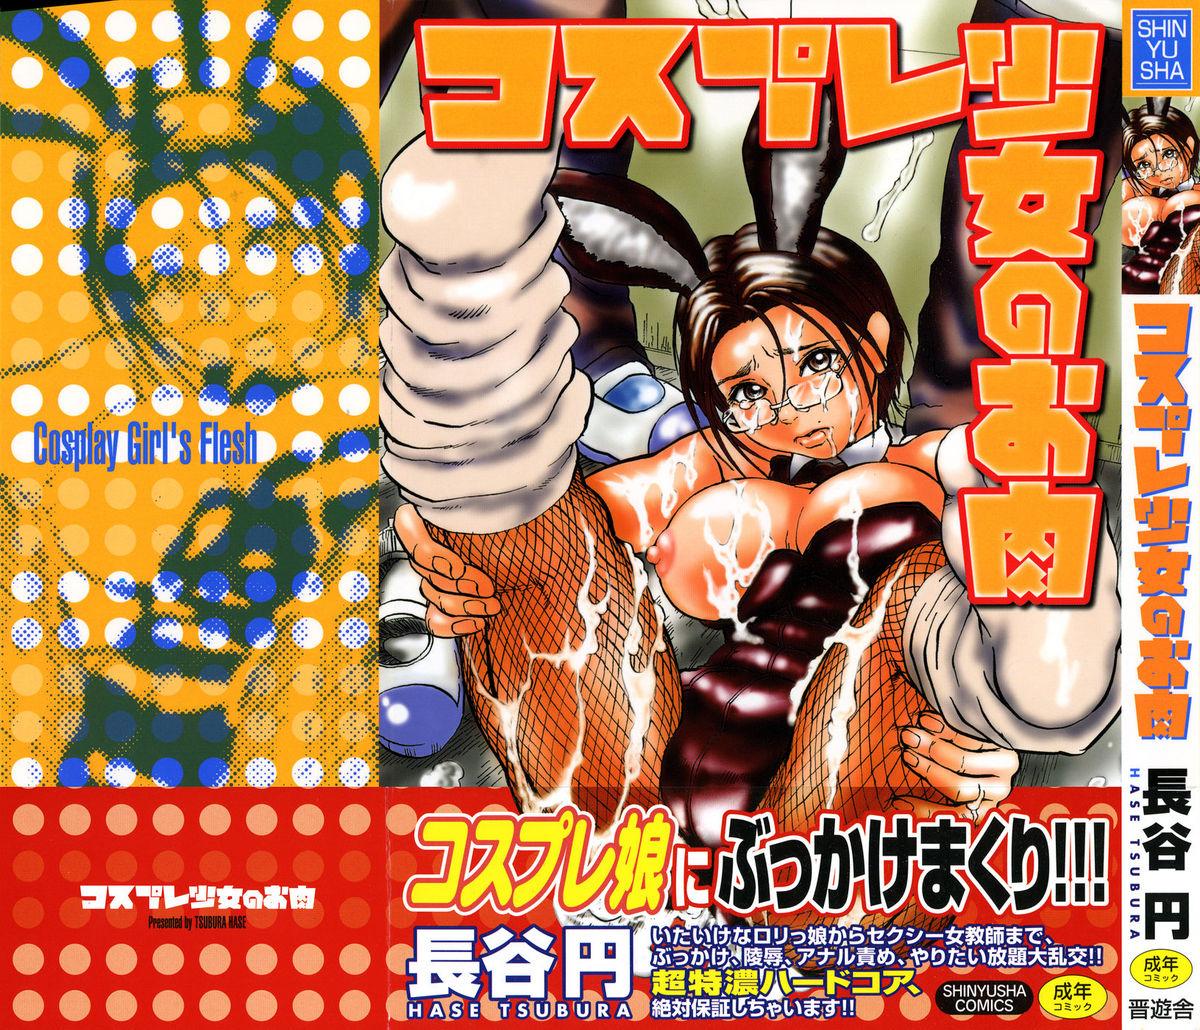 Cosplay Shoujo no Oniku - Cosplay Girl's Flesh 198